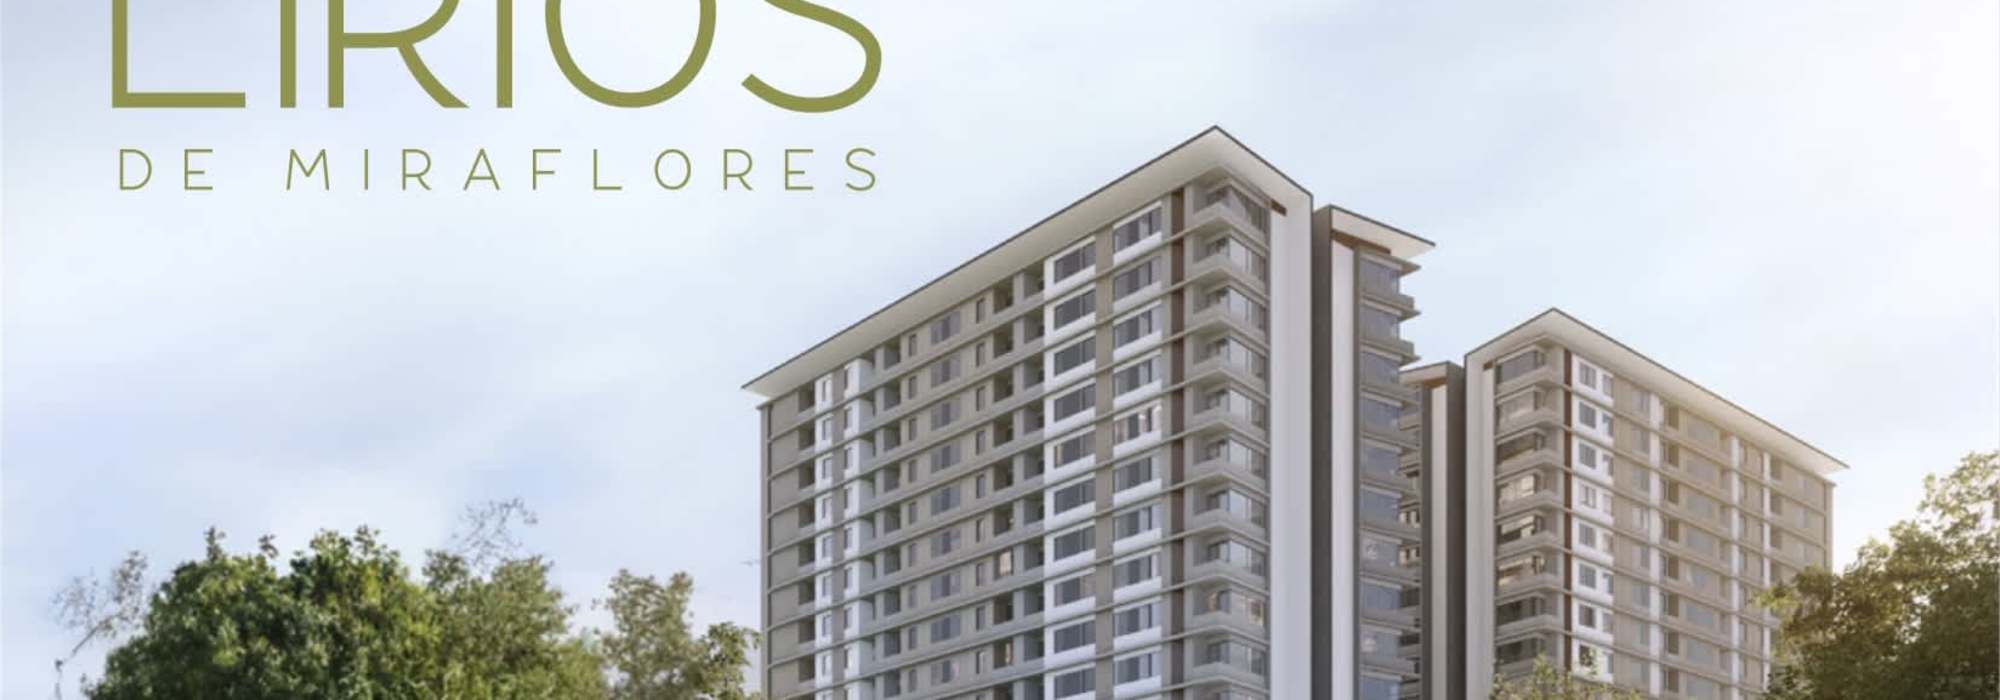 Pre-sale apartment building Lirios de Miraflores, TGU